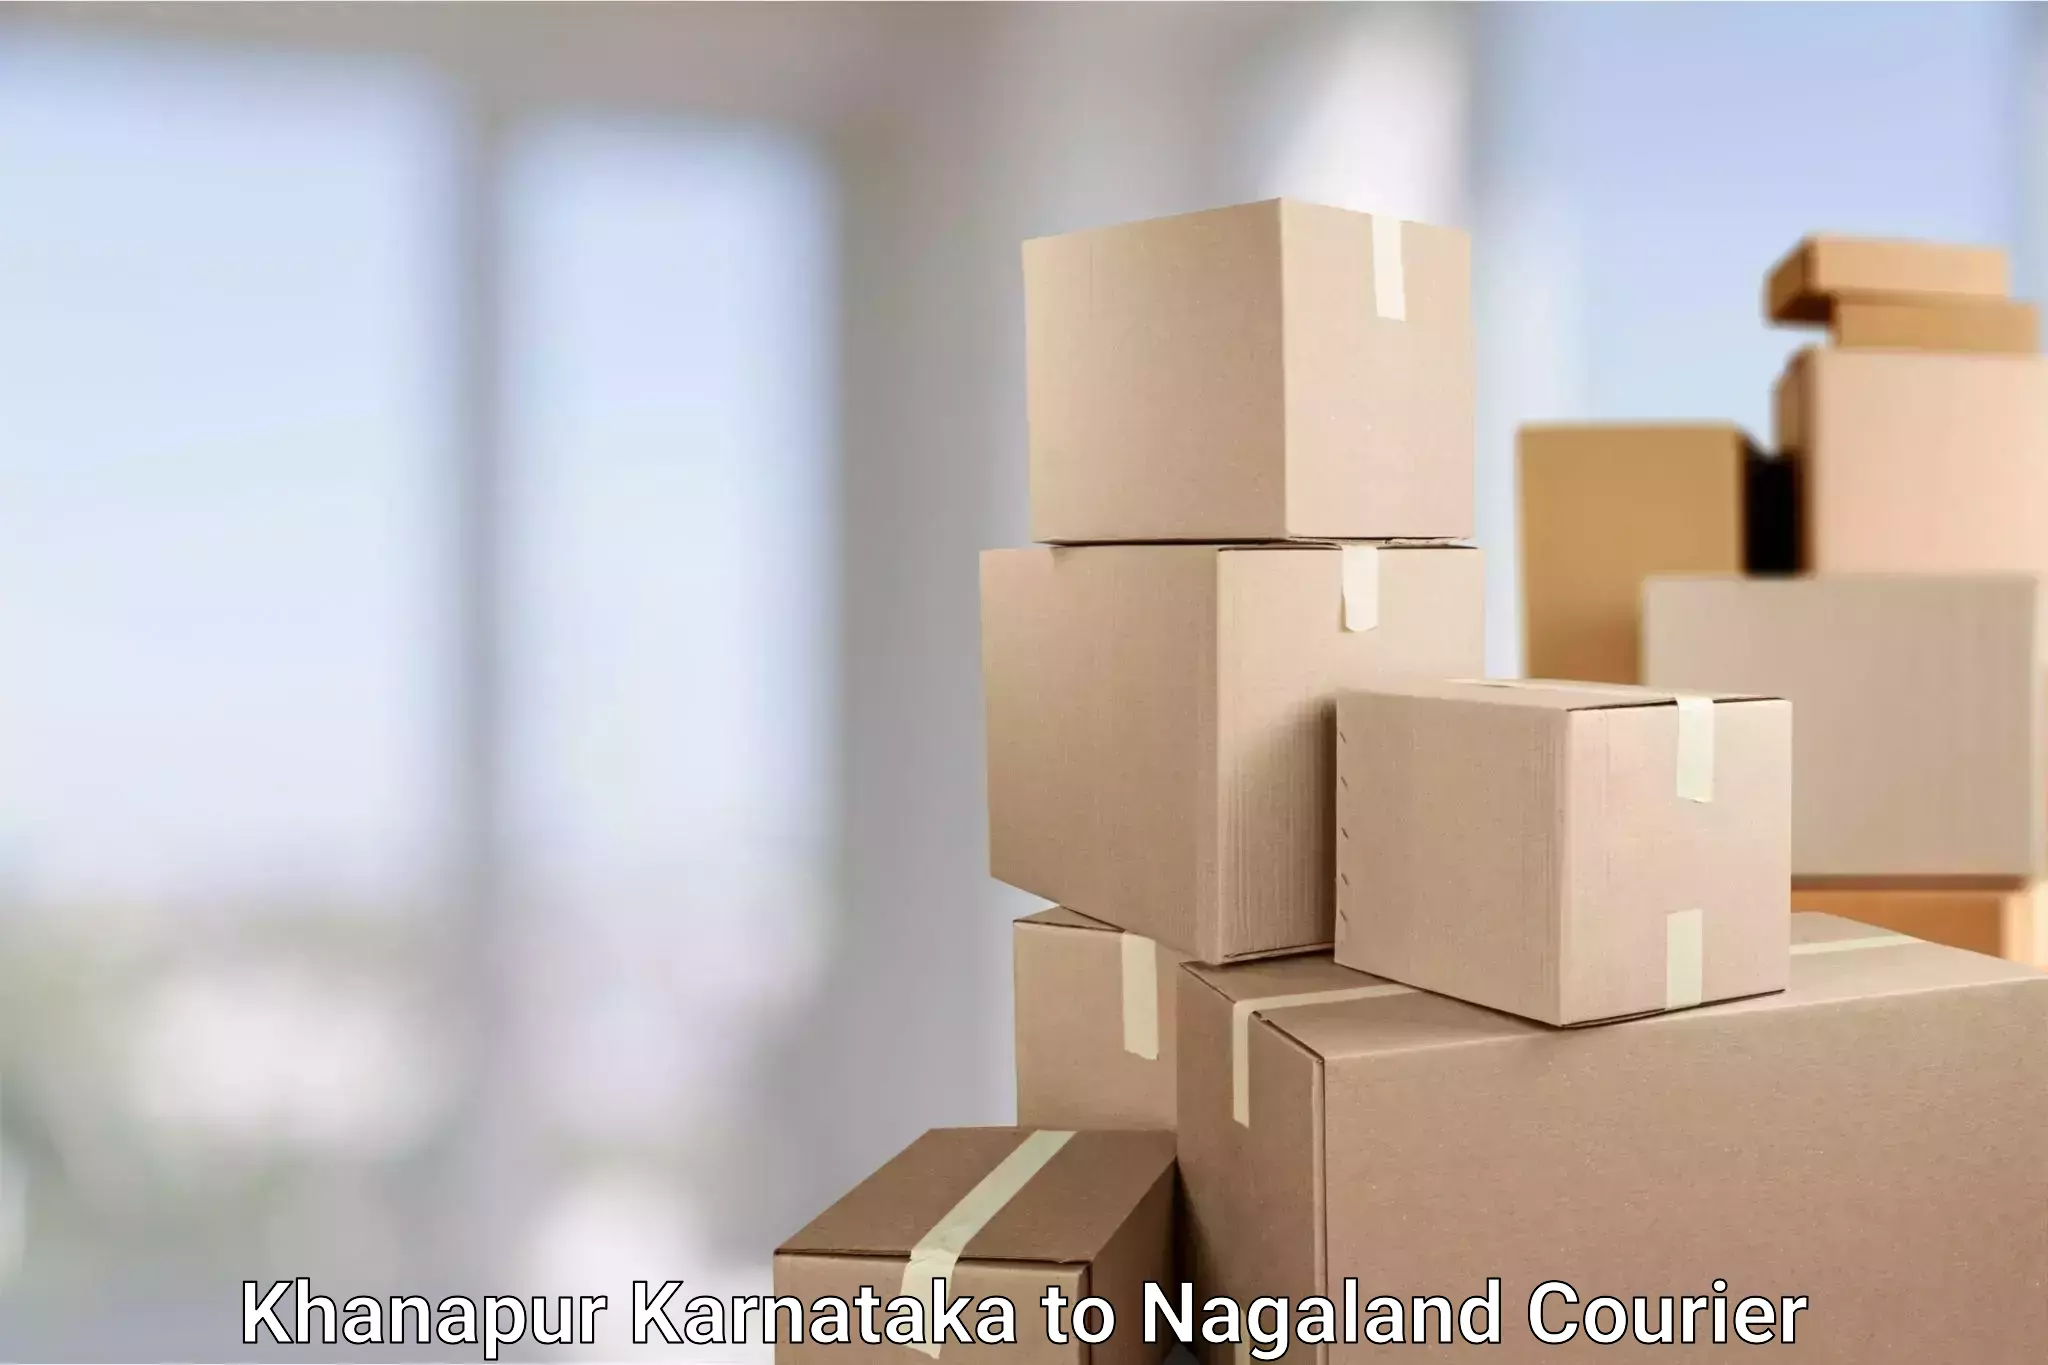 Premium courier services Khanapur Karnataka to Nagaland